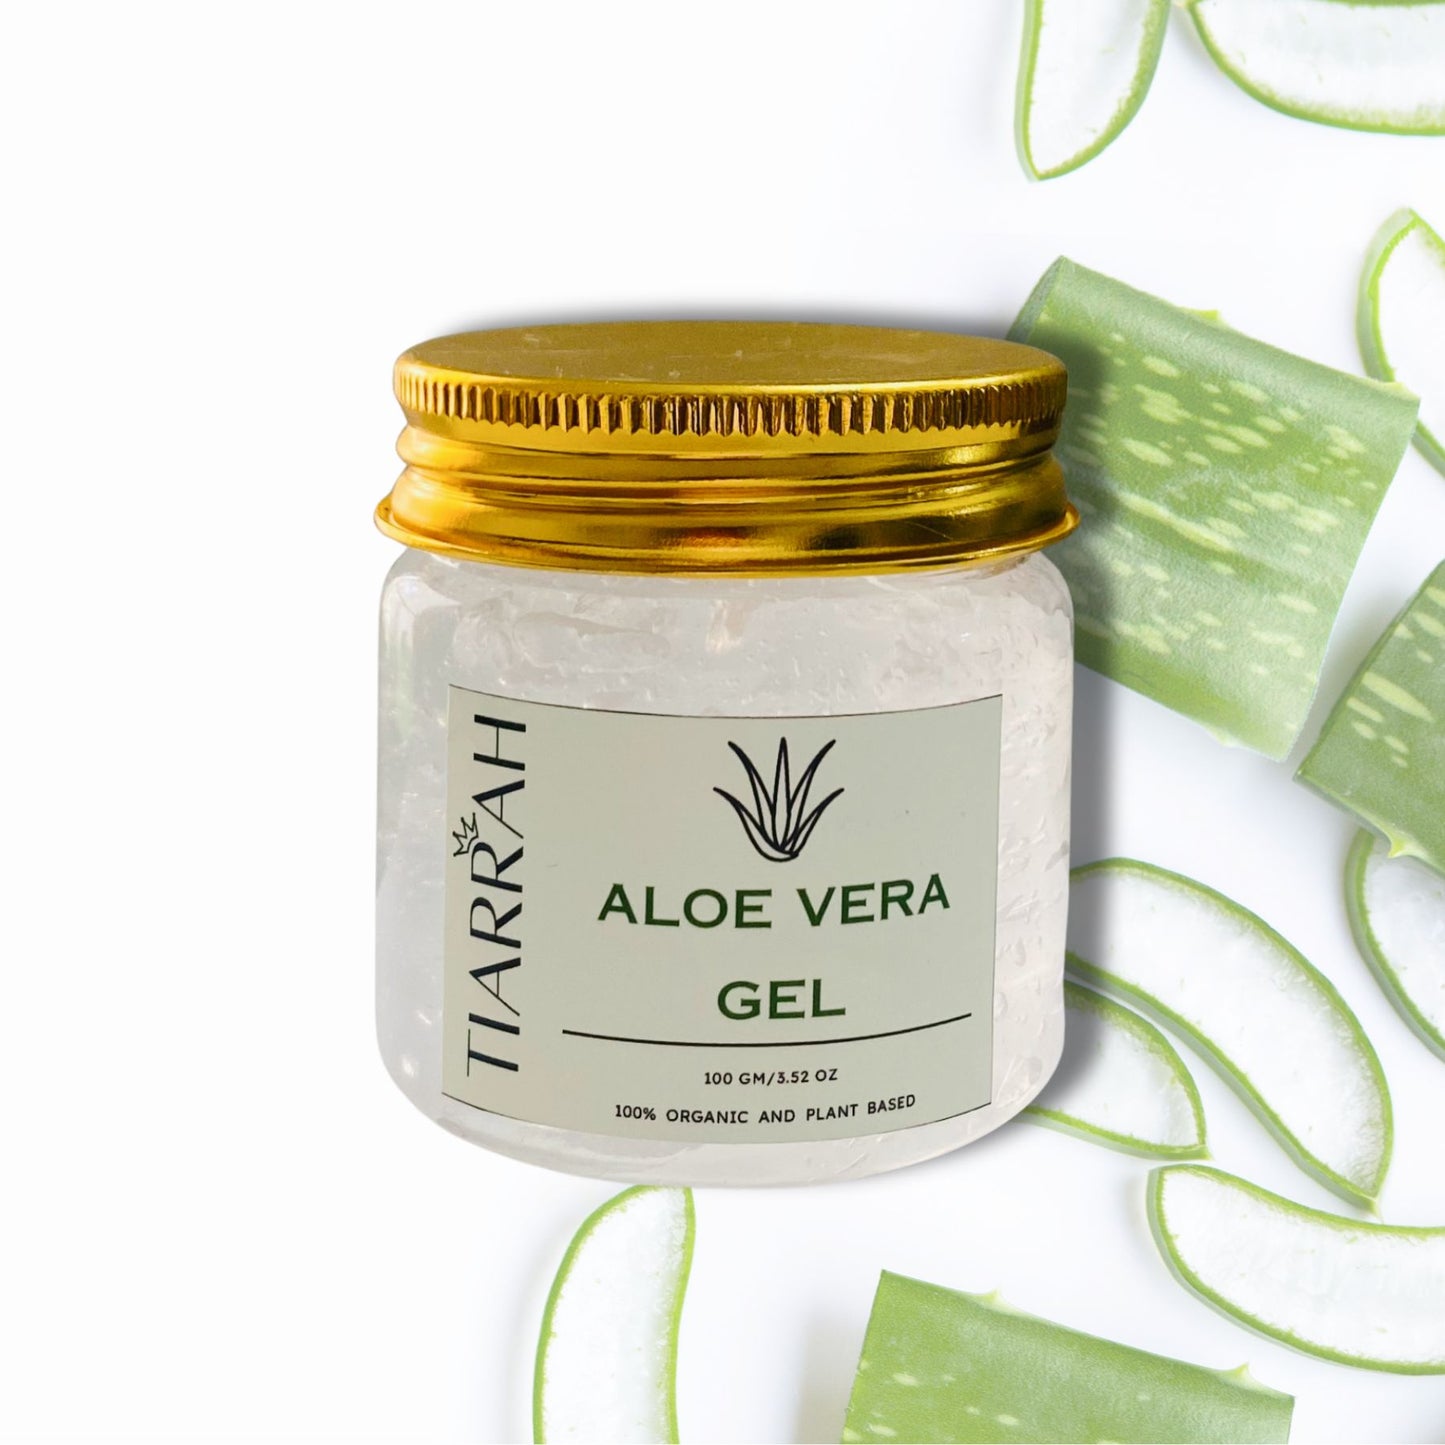 Tiarrah Aloe Vera Gel: Natural, Organic, Non-Toxic - The Luxury Bath and Body Shop